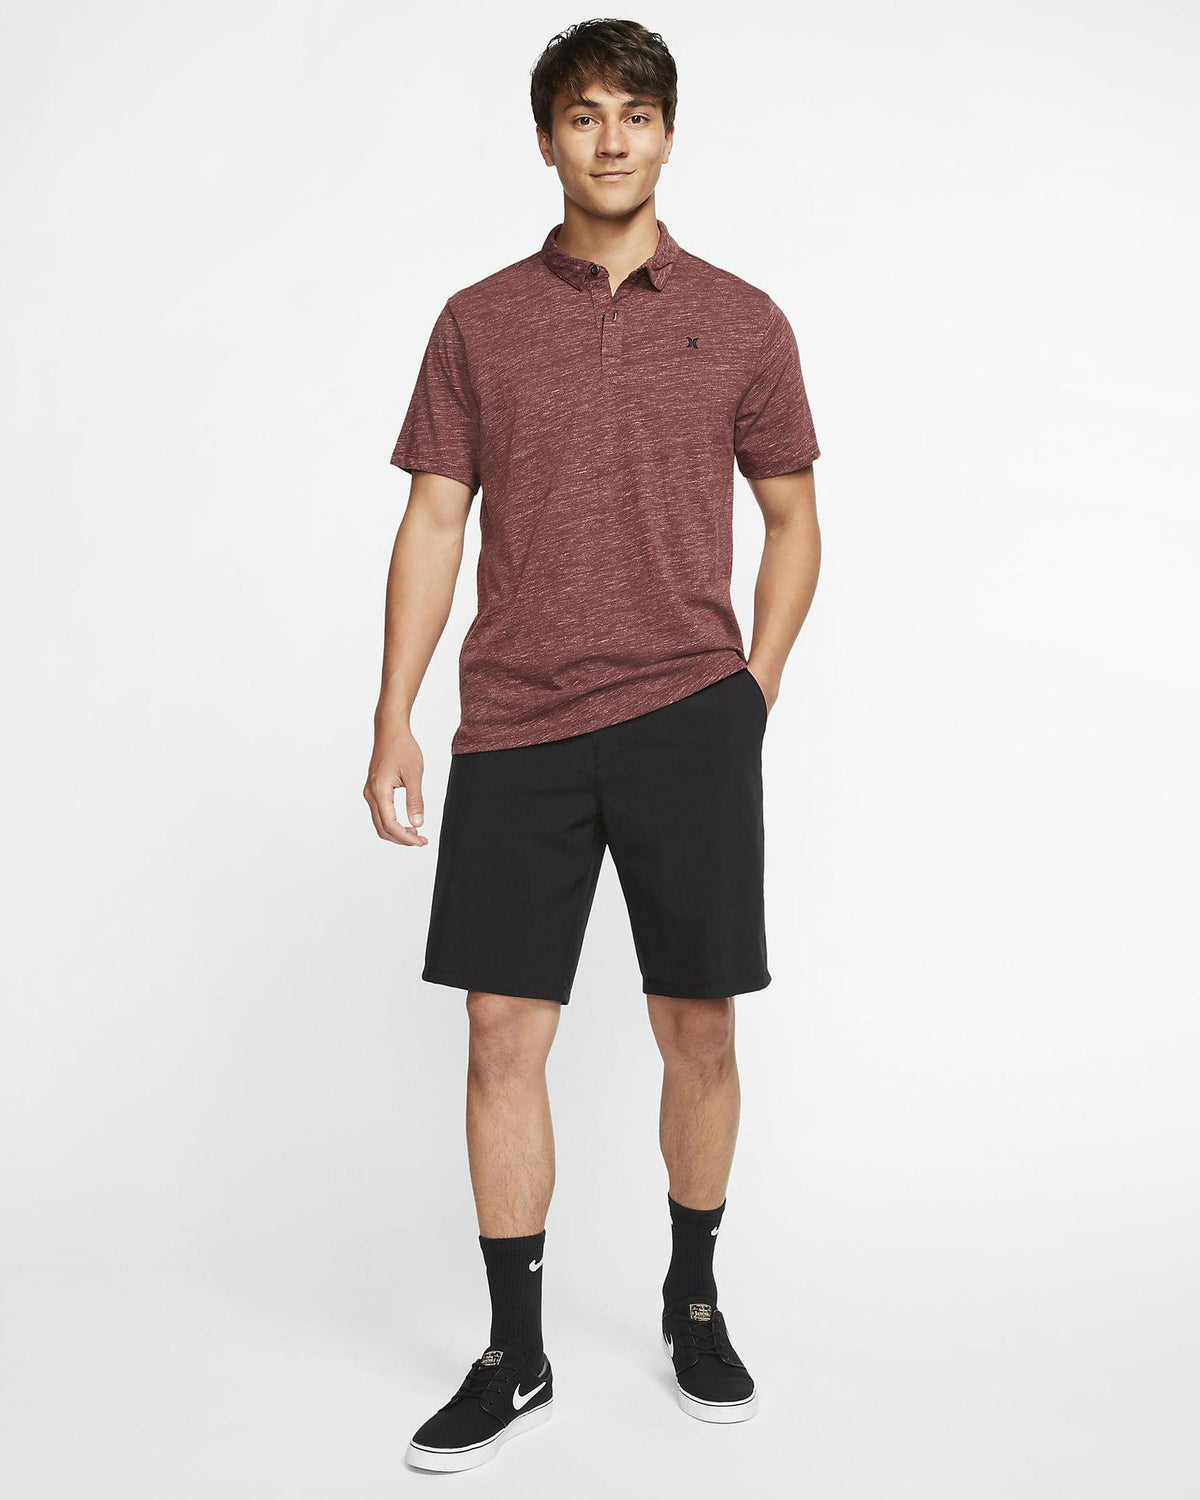 Men's Short-Sleeve Polo Hurley Dri-FIT Coronado